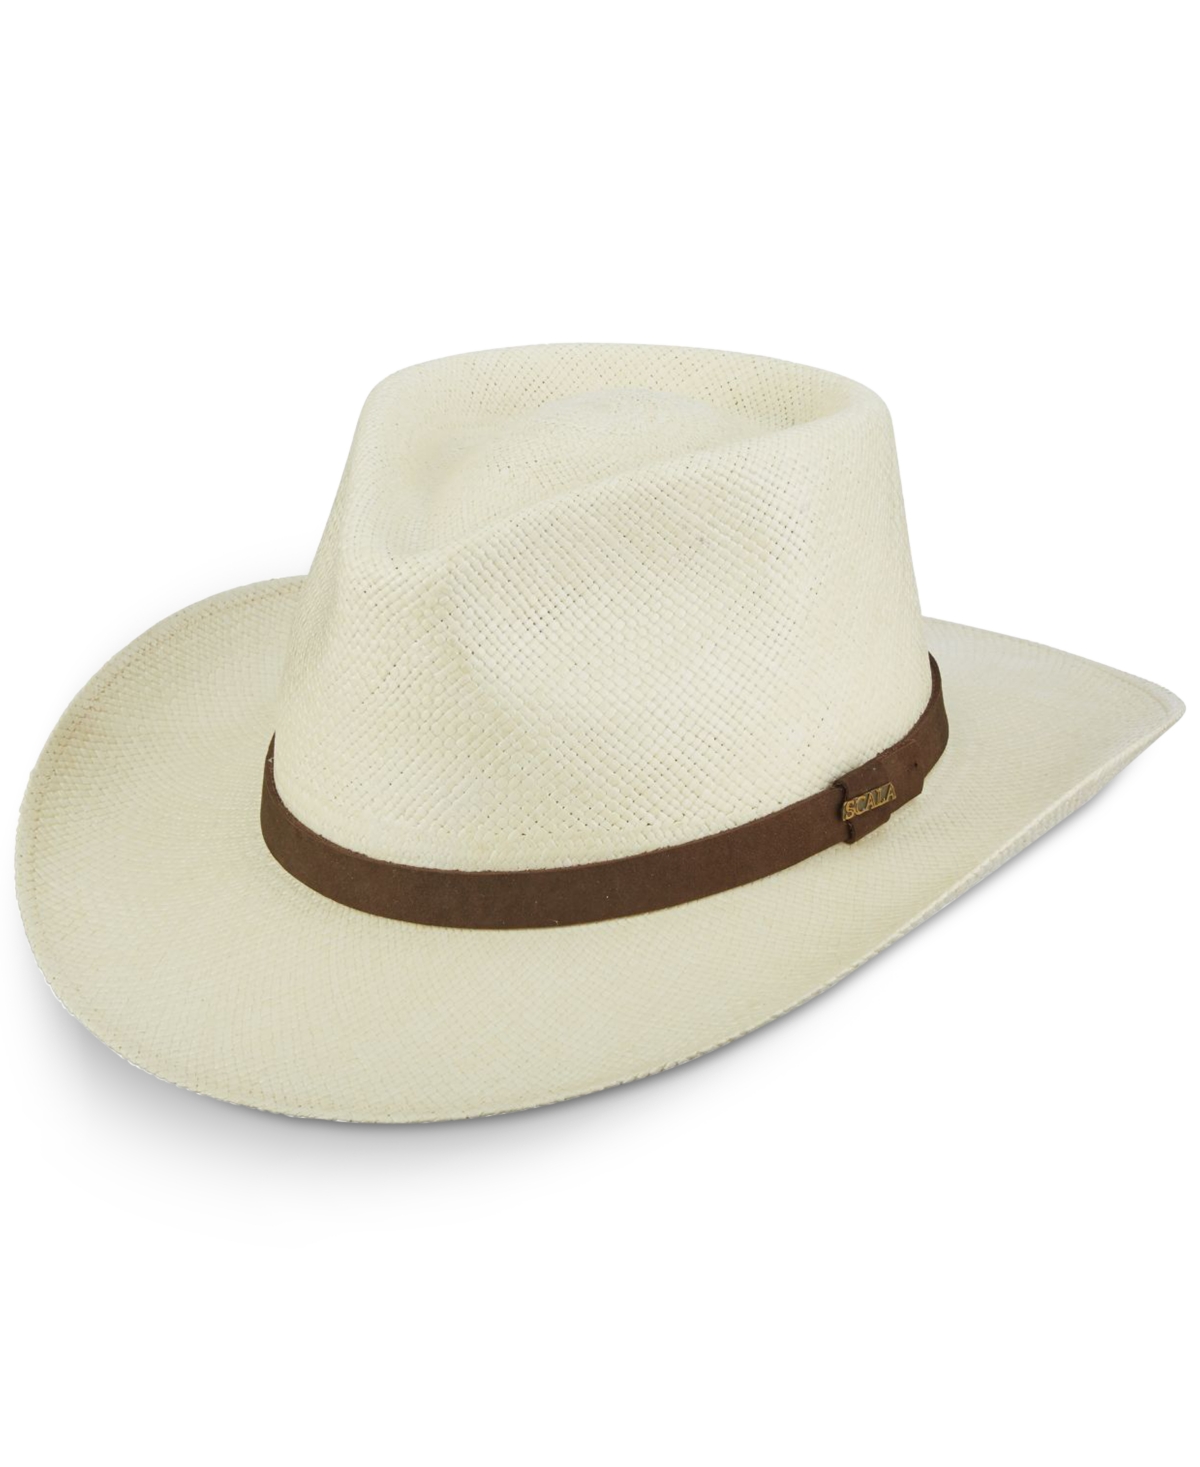 Men's Panama Outback Hat - Natural